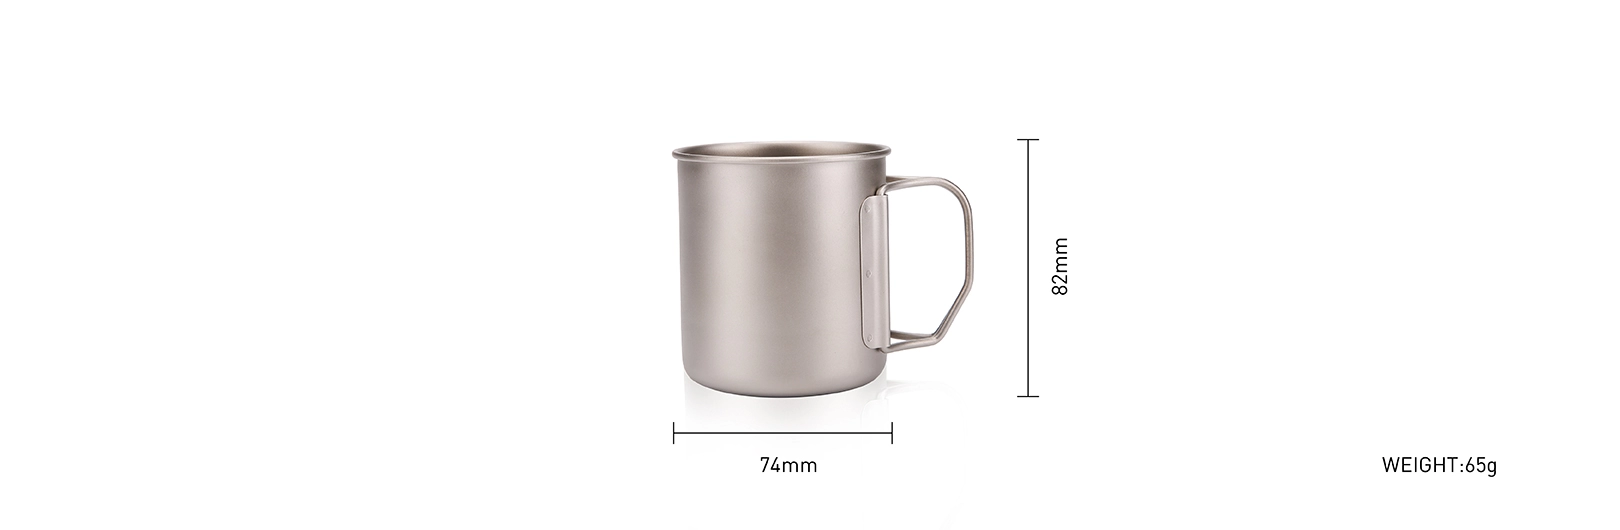 details of Camping ultralight foldable titanium Mug cup